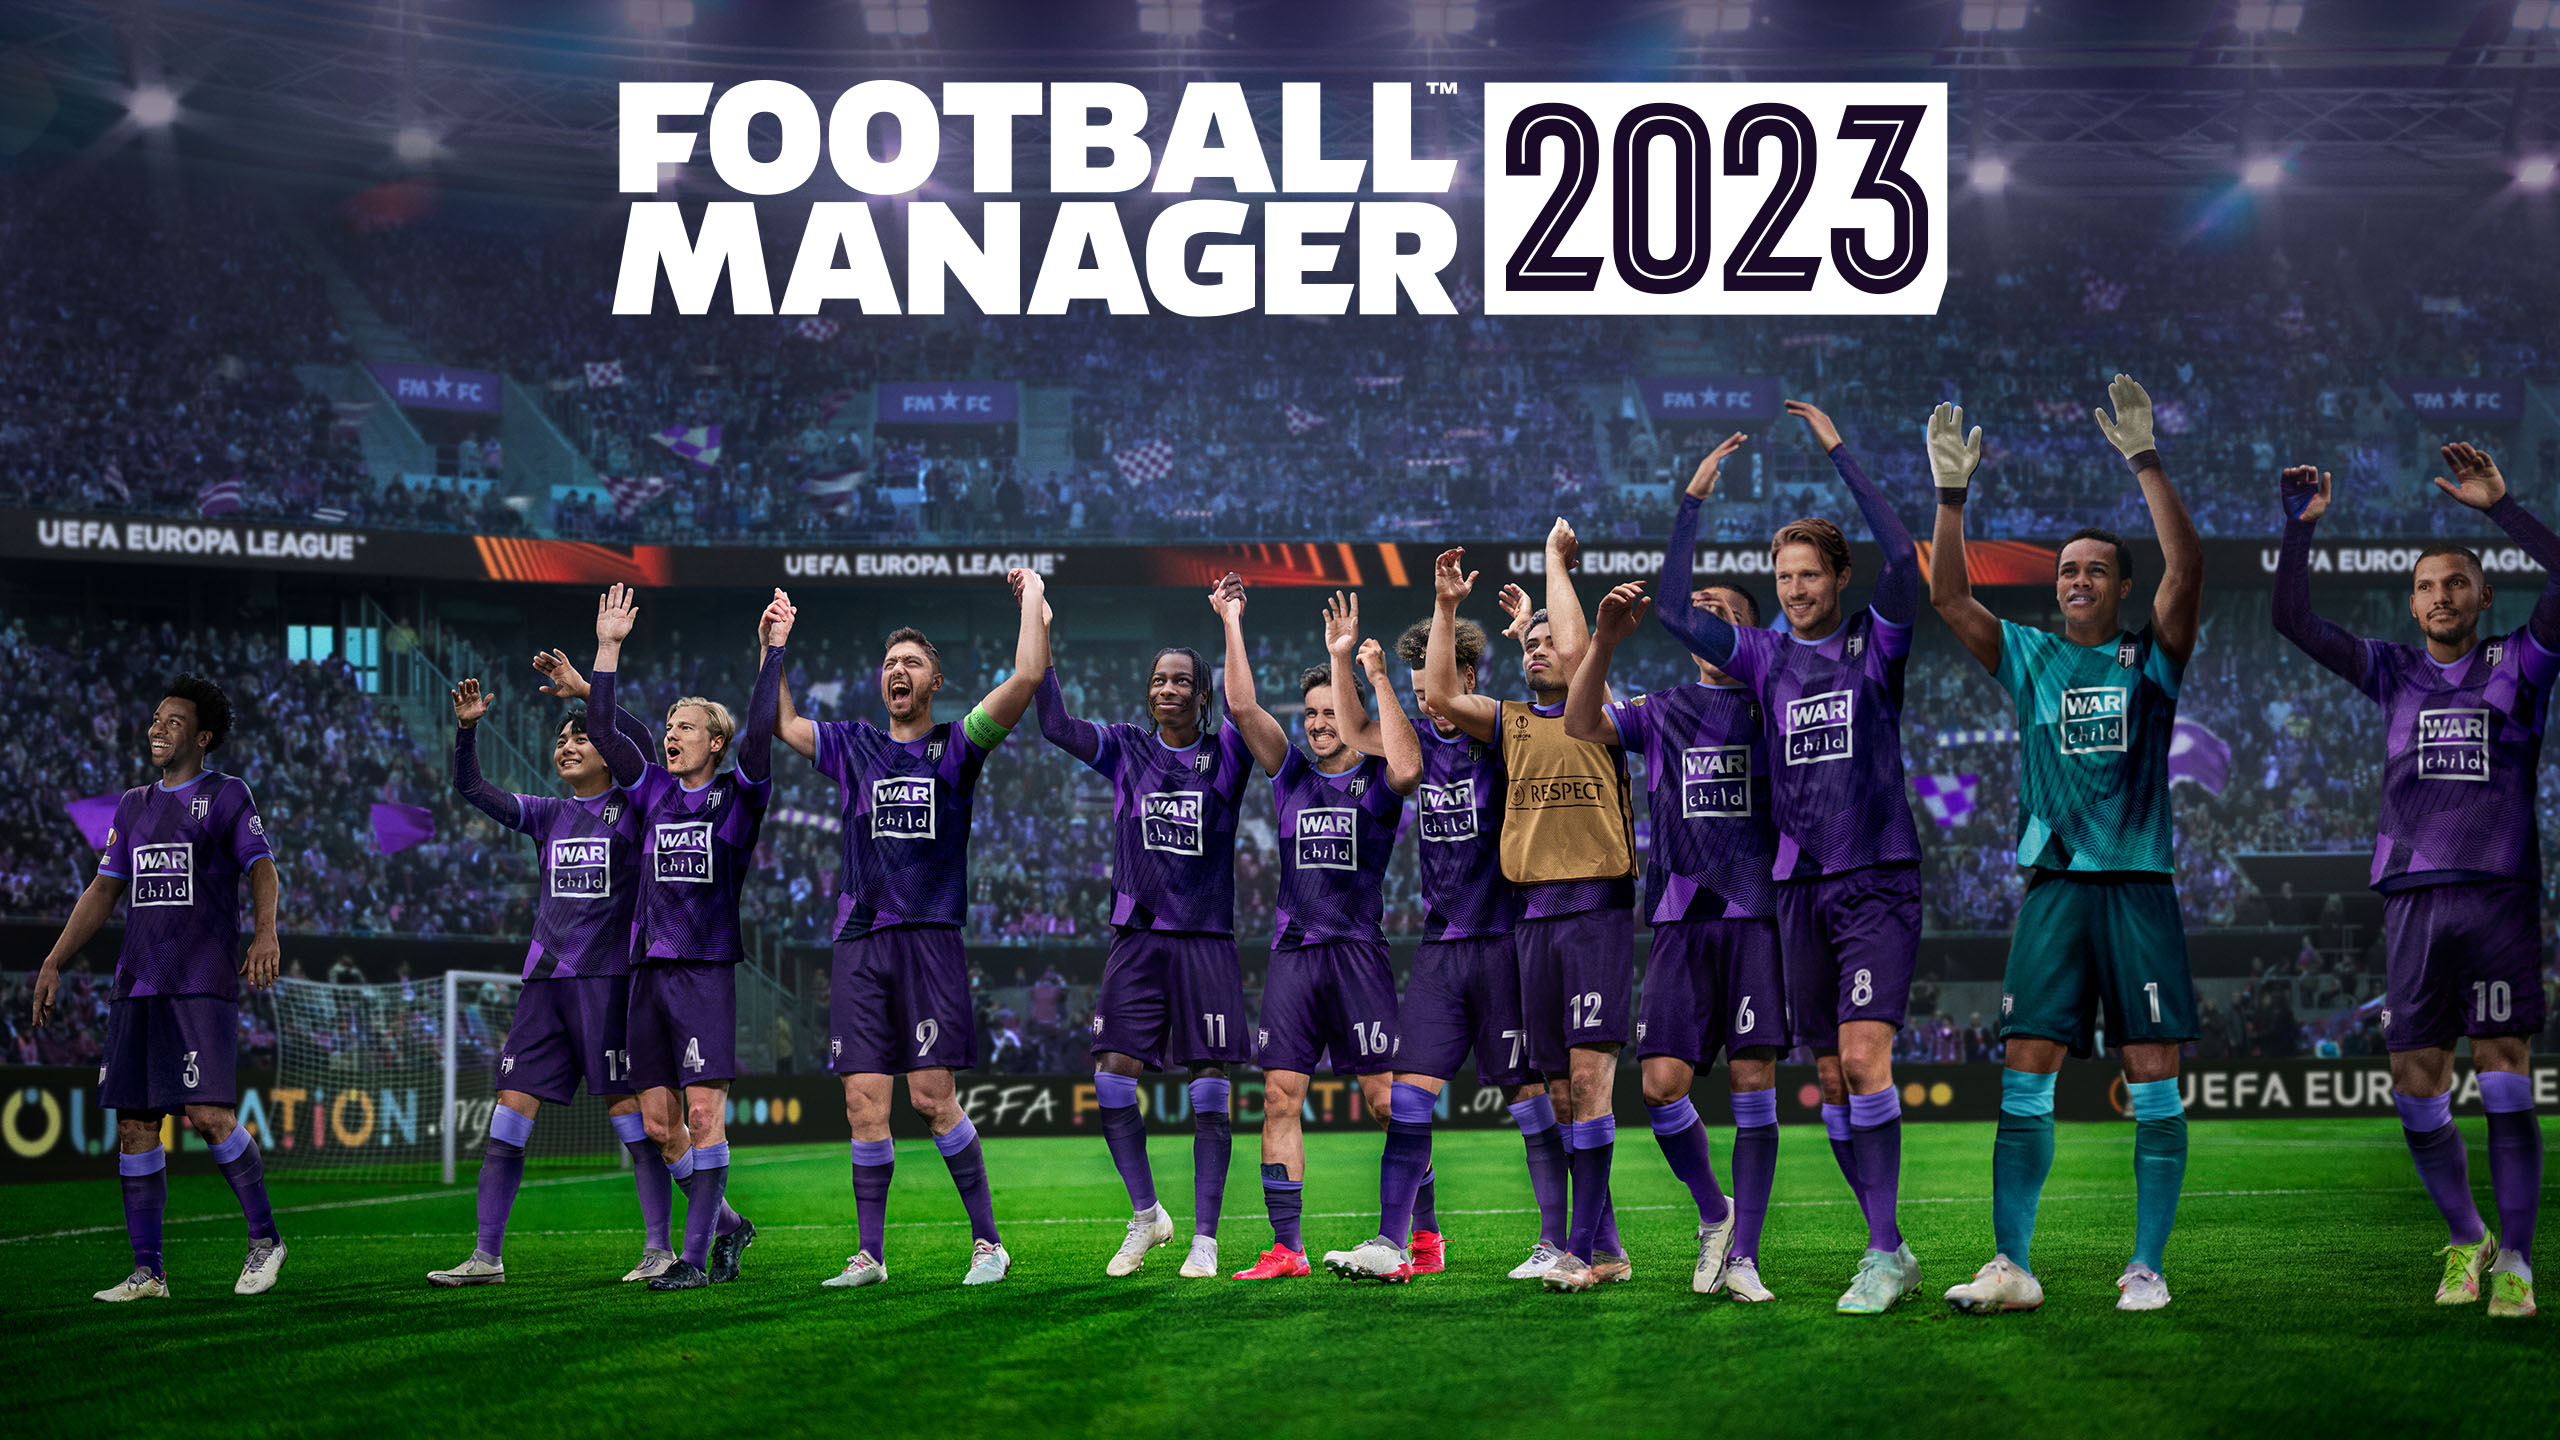 Giovedì il TGTech ti regala Football Manager 2023!